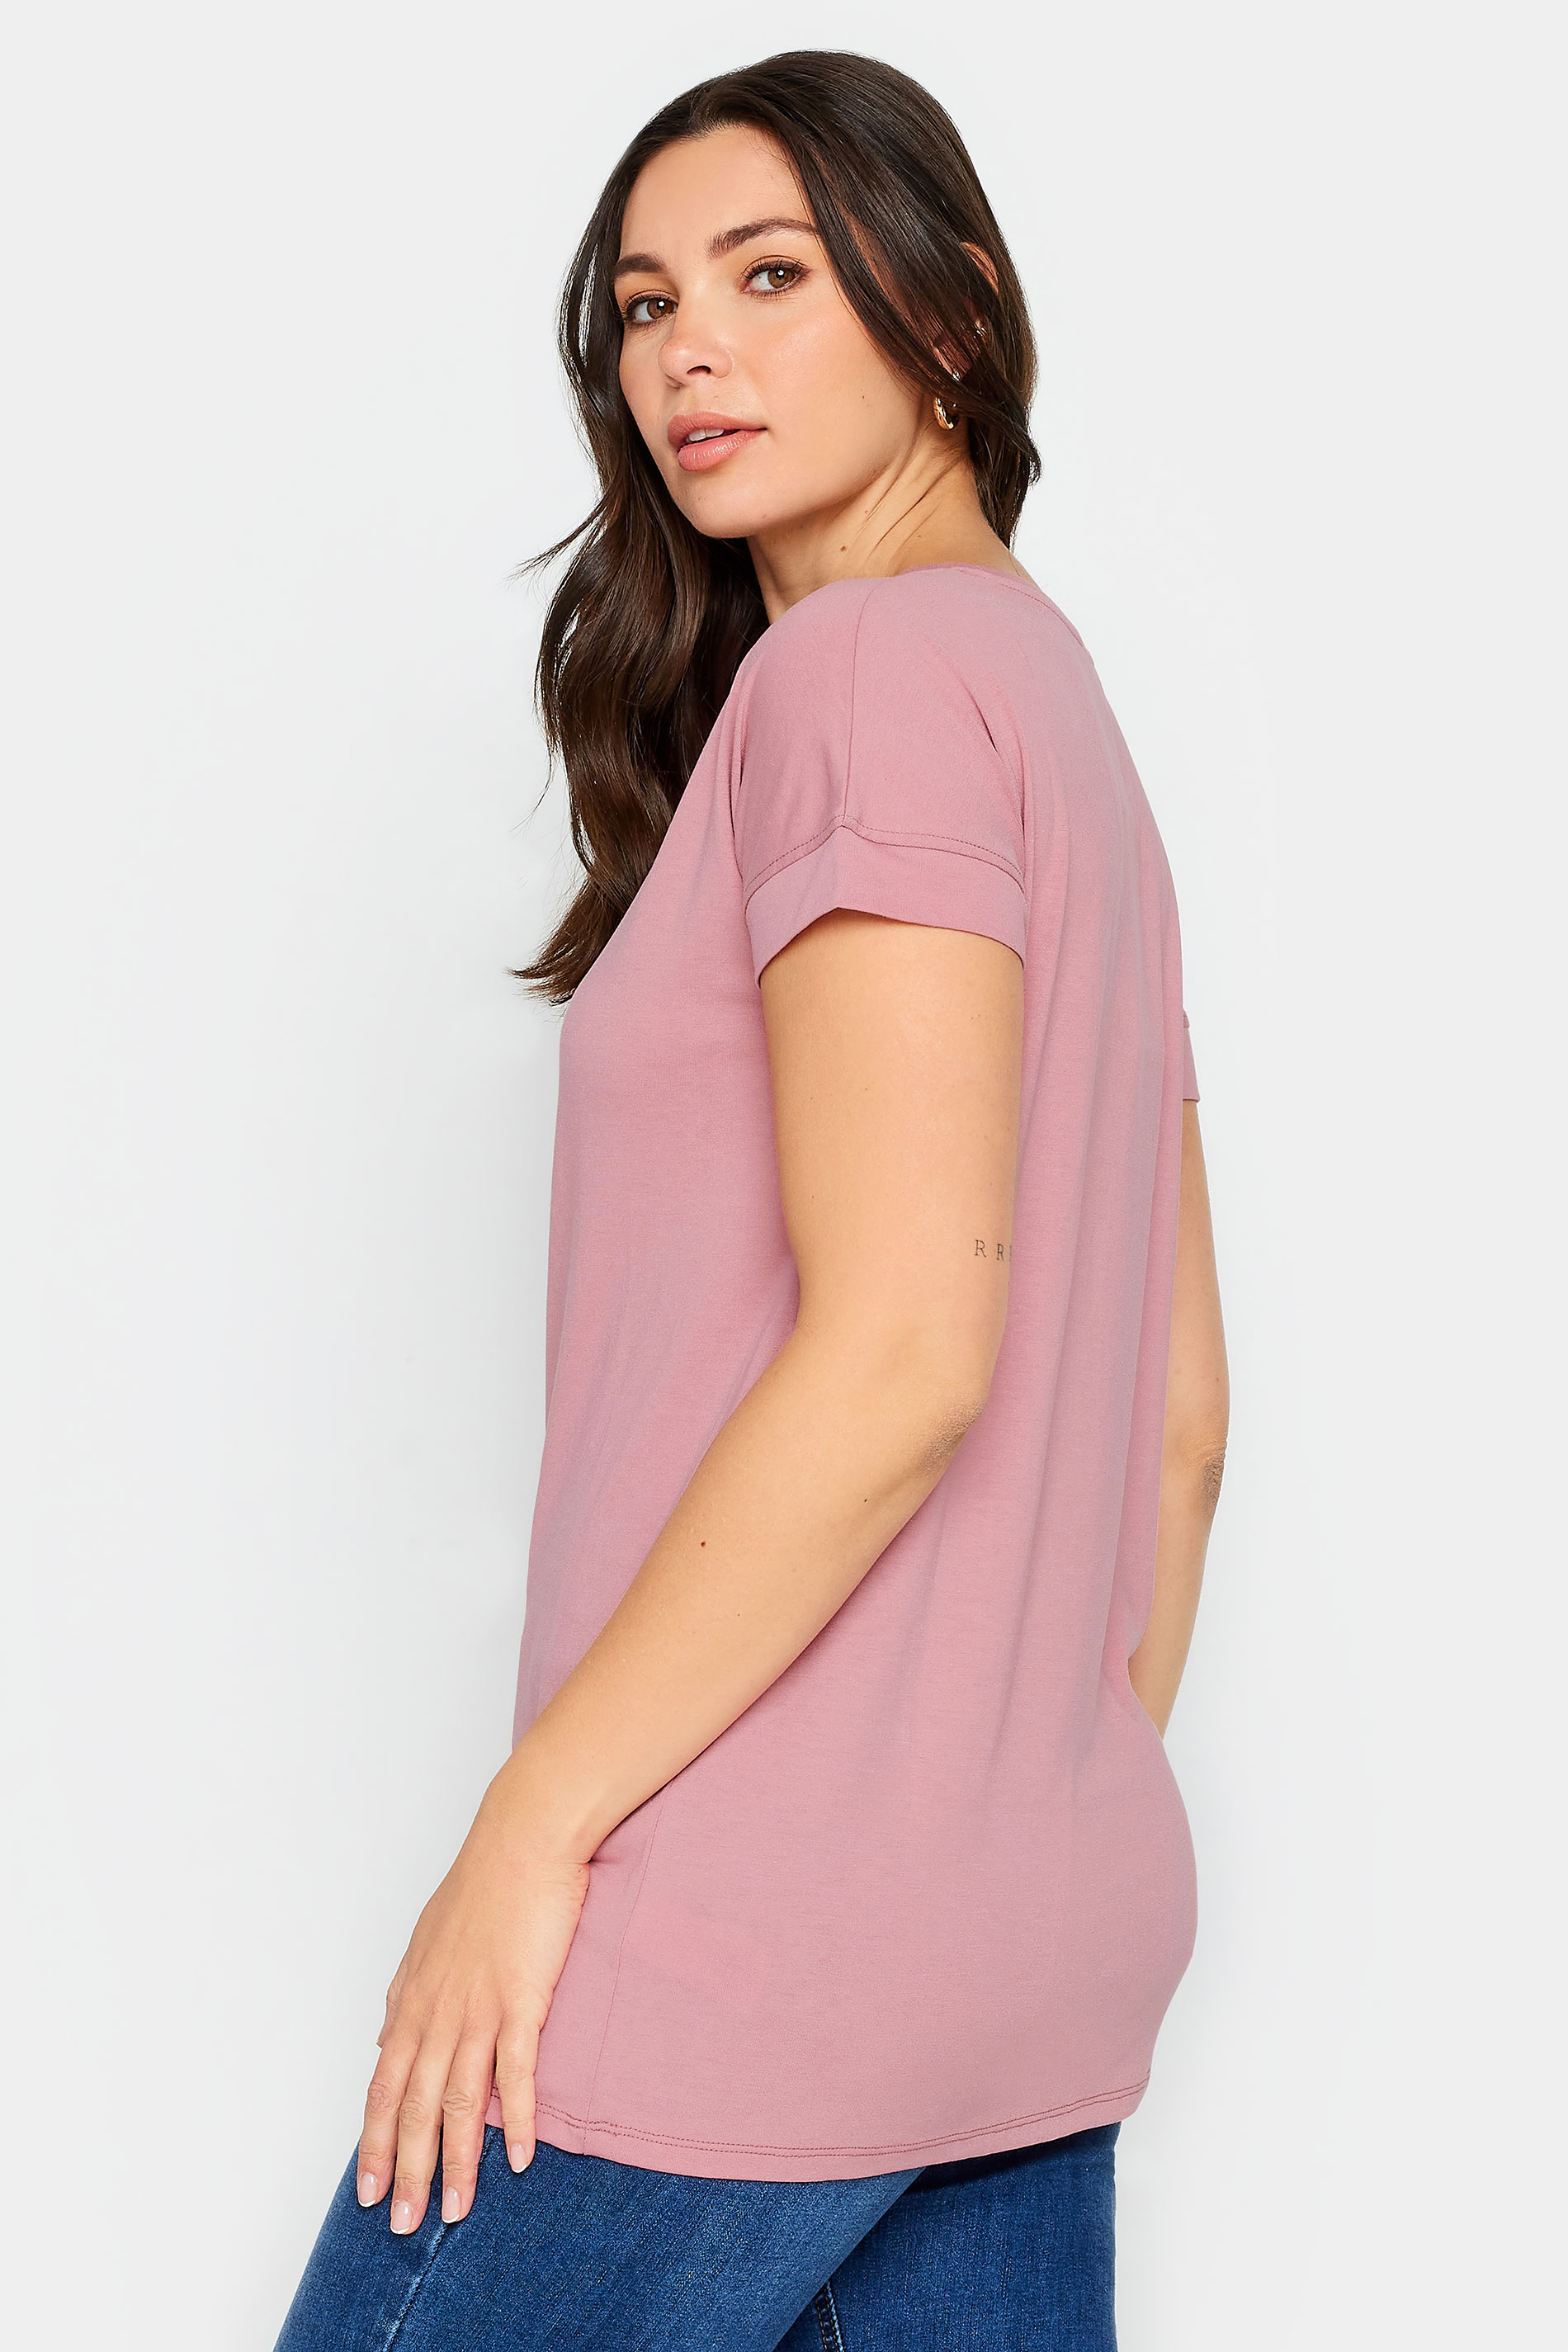 LTS PREMIUM Tall Womens Pink V-Neck T-Shirt | Long Tall Sally 3